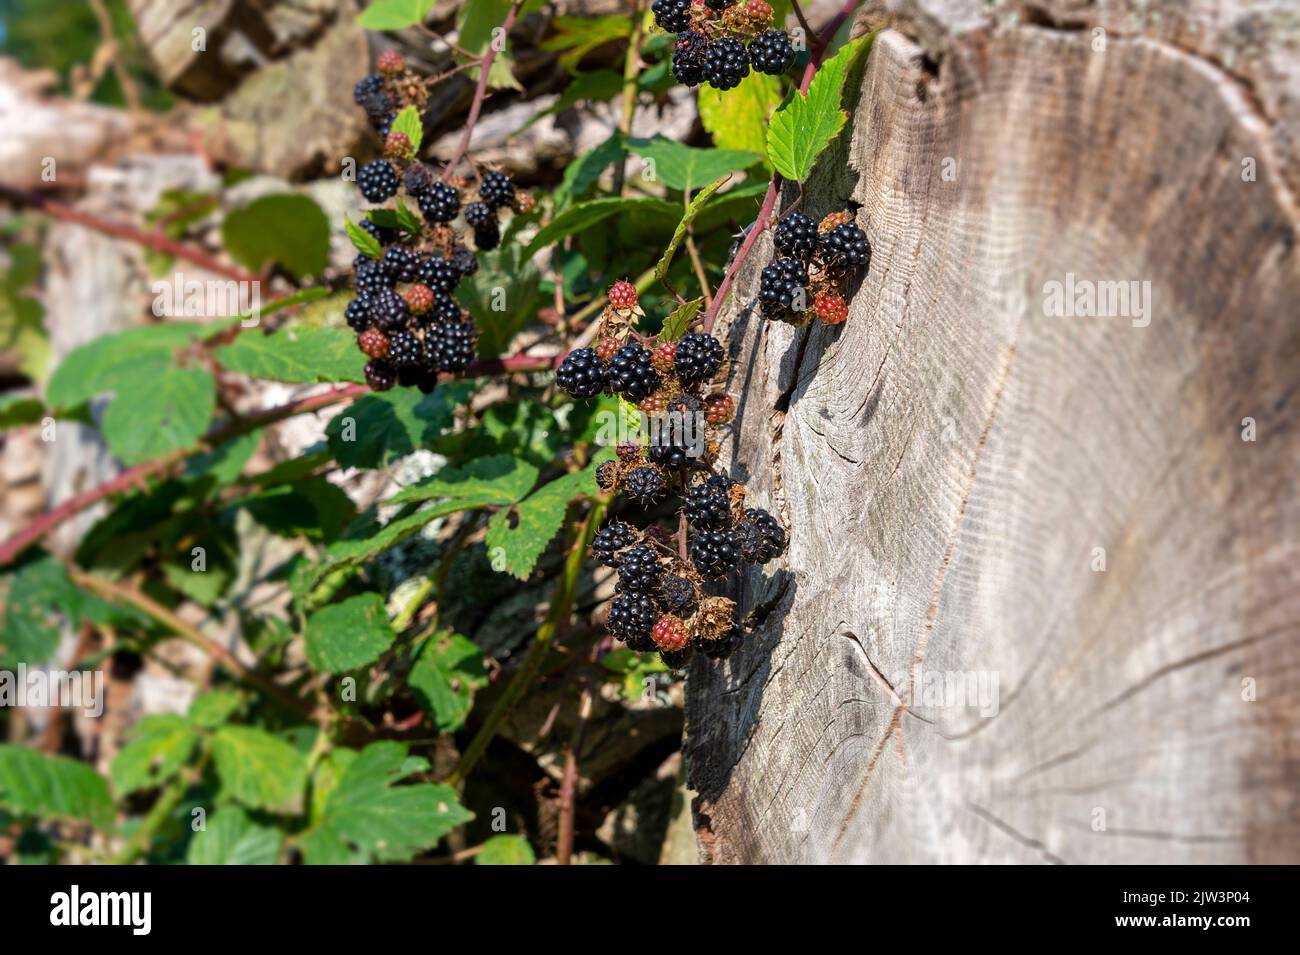 yerbas silvestres maduras que crecen en bosques. Foto de stock